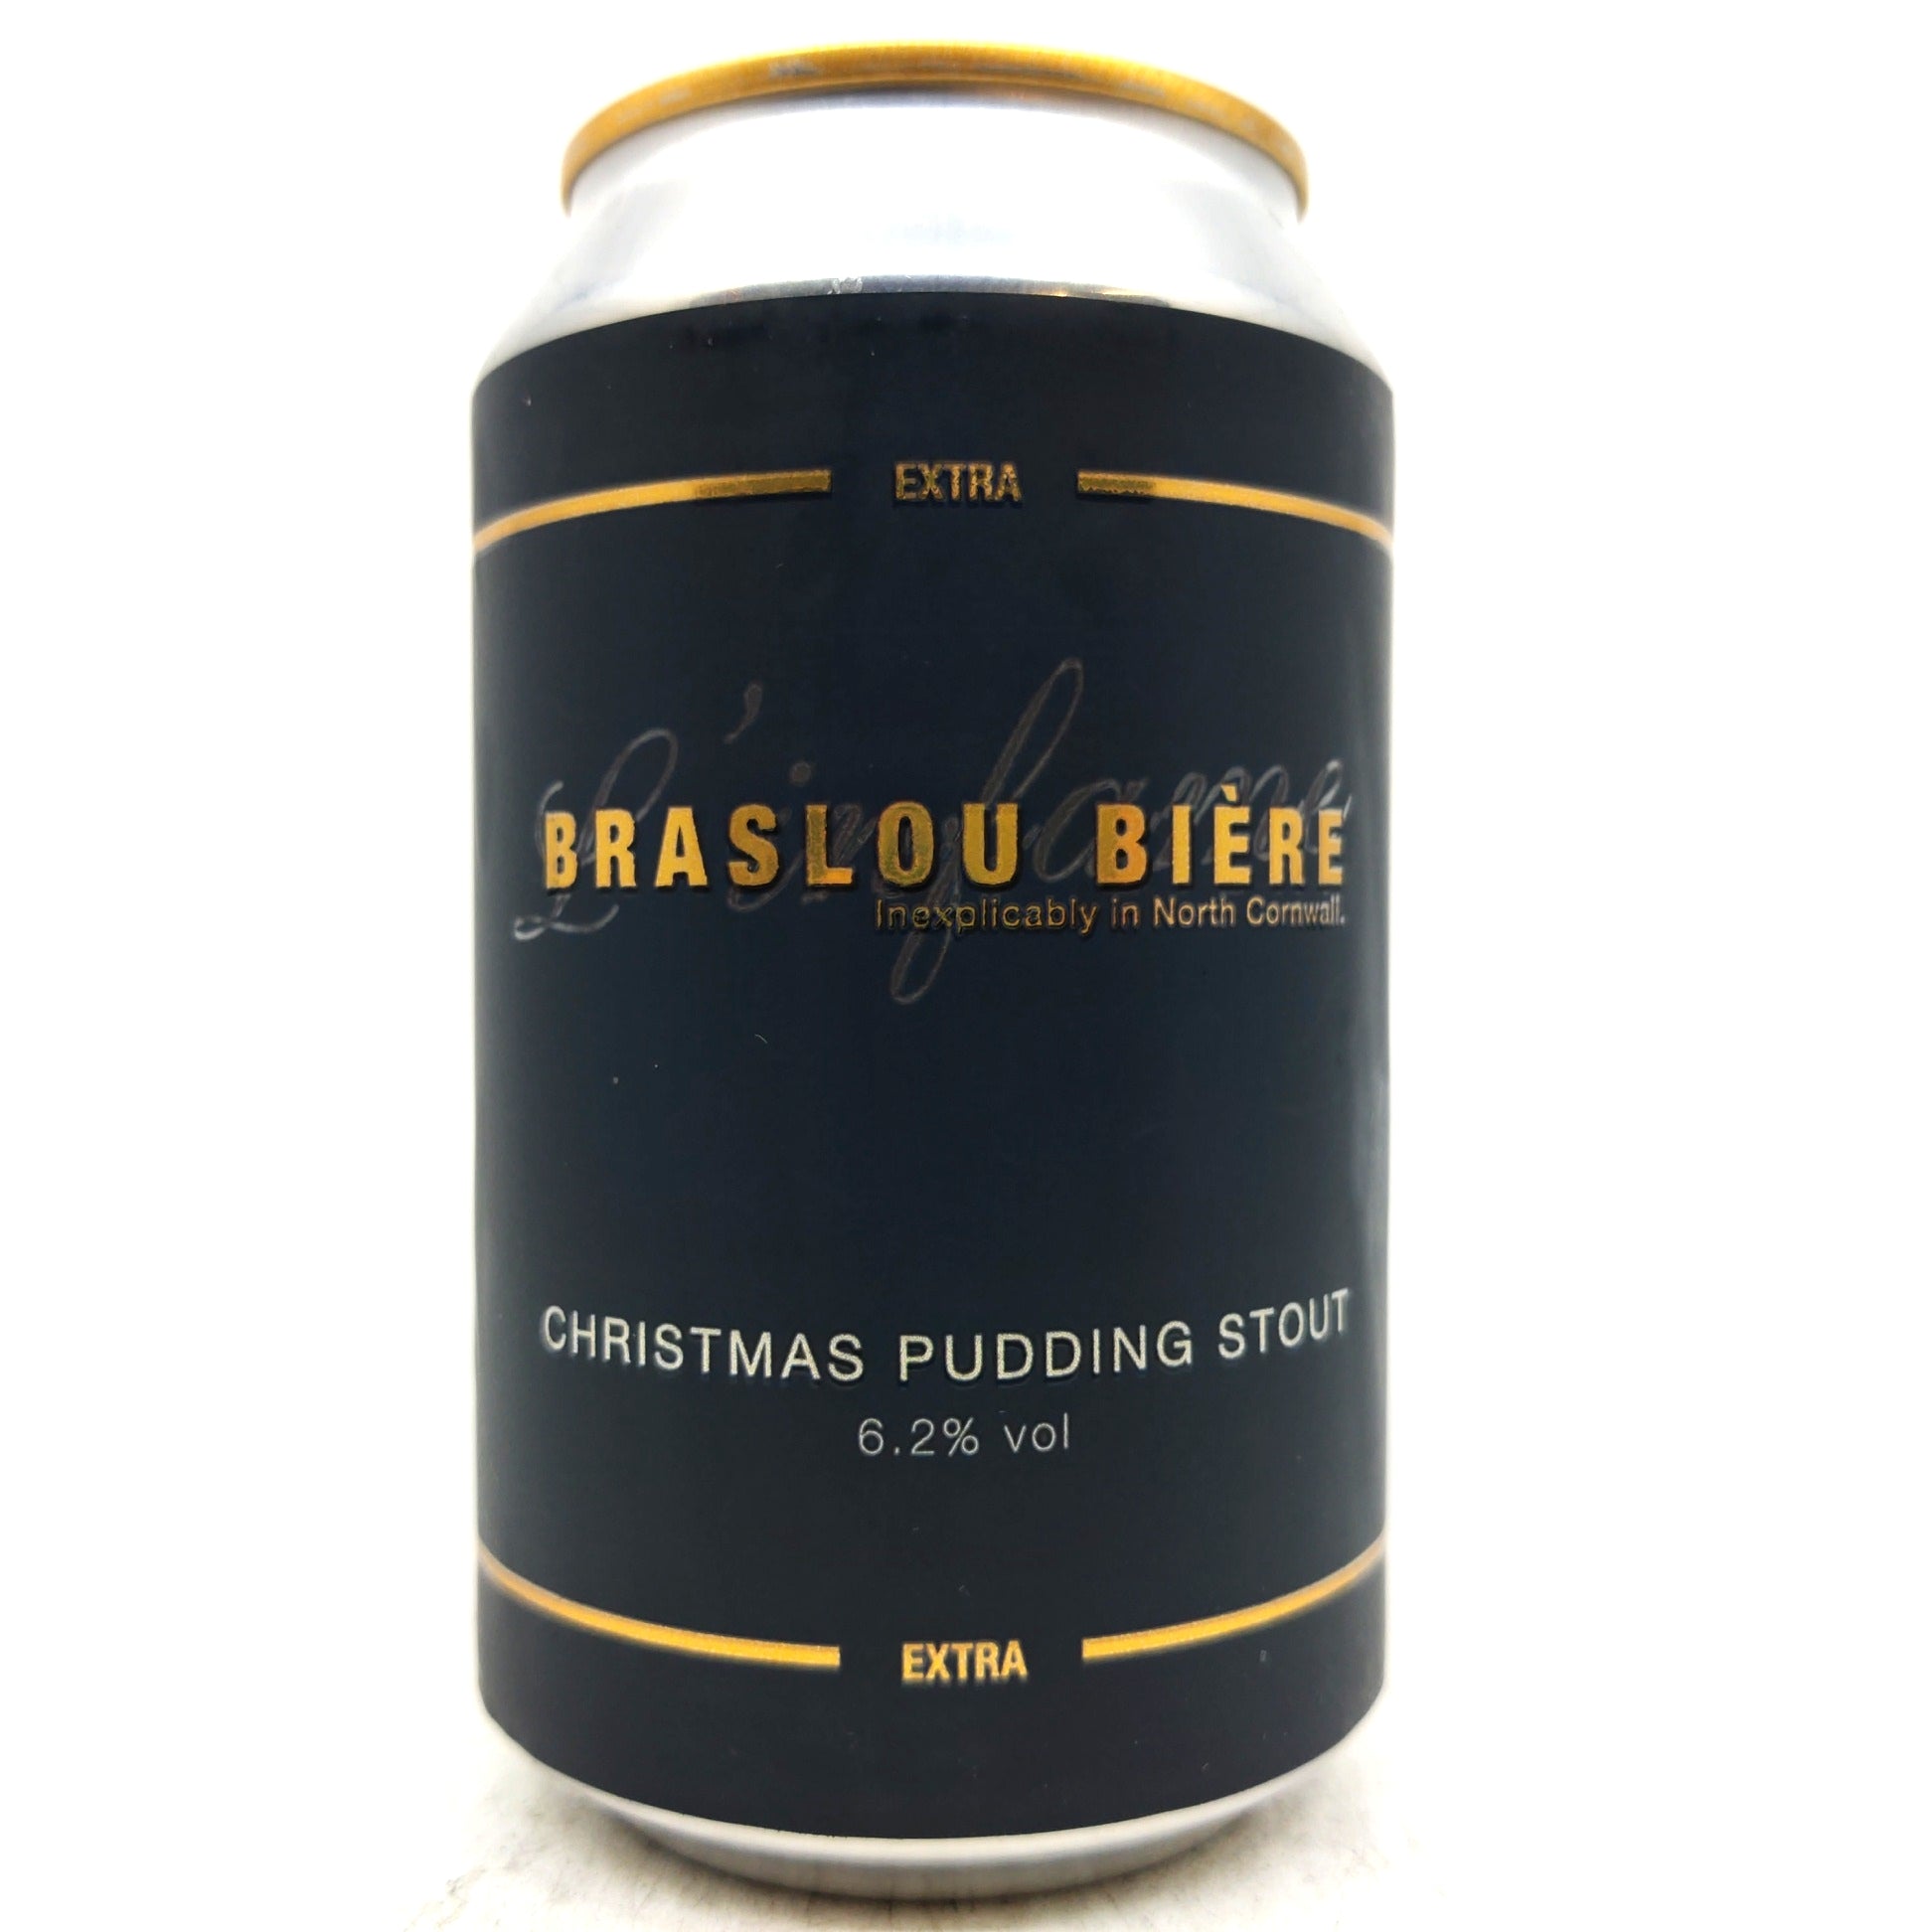 Braslou Biere Christmas Pudding Stout 6.2% (330ml can)-Hop Burns & Black